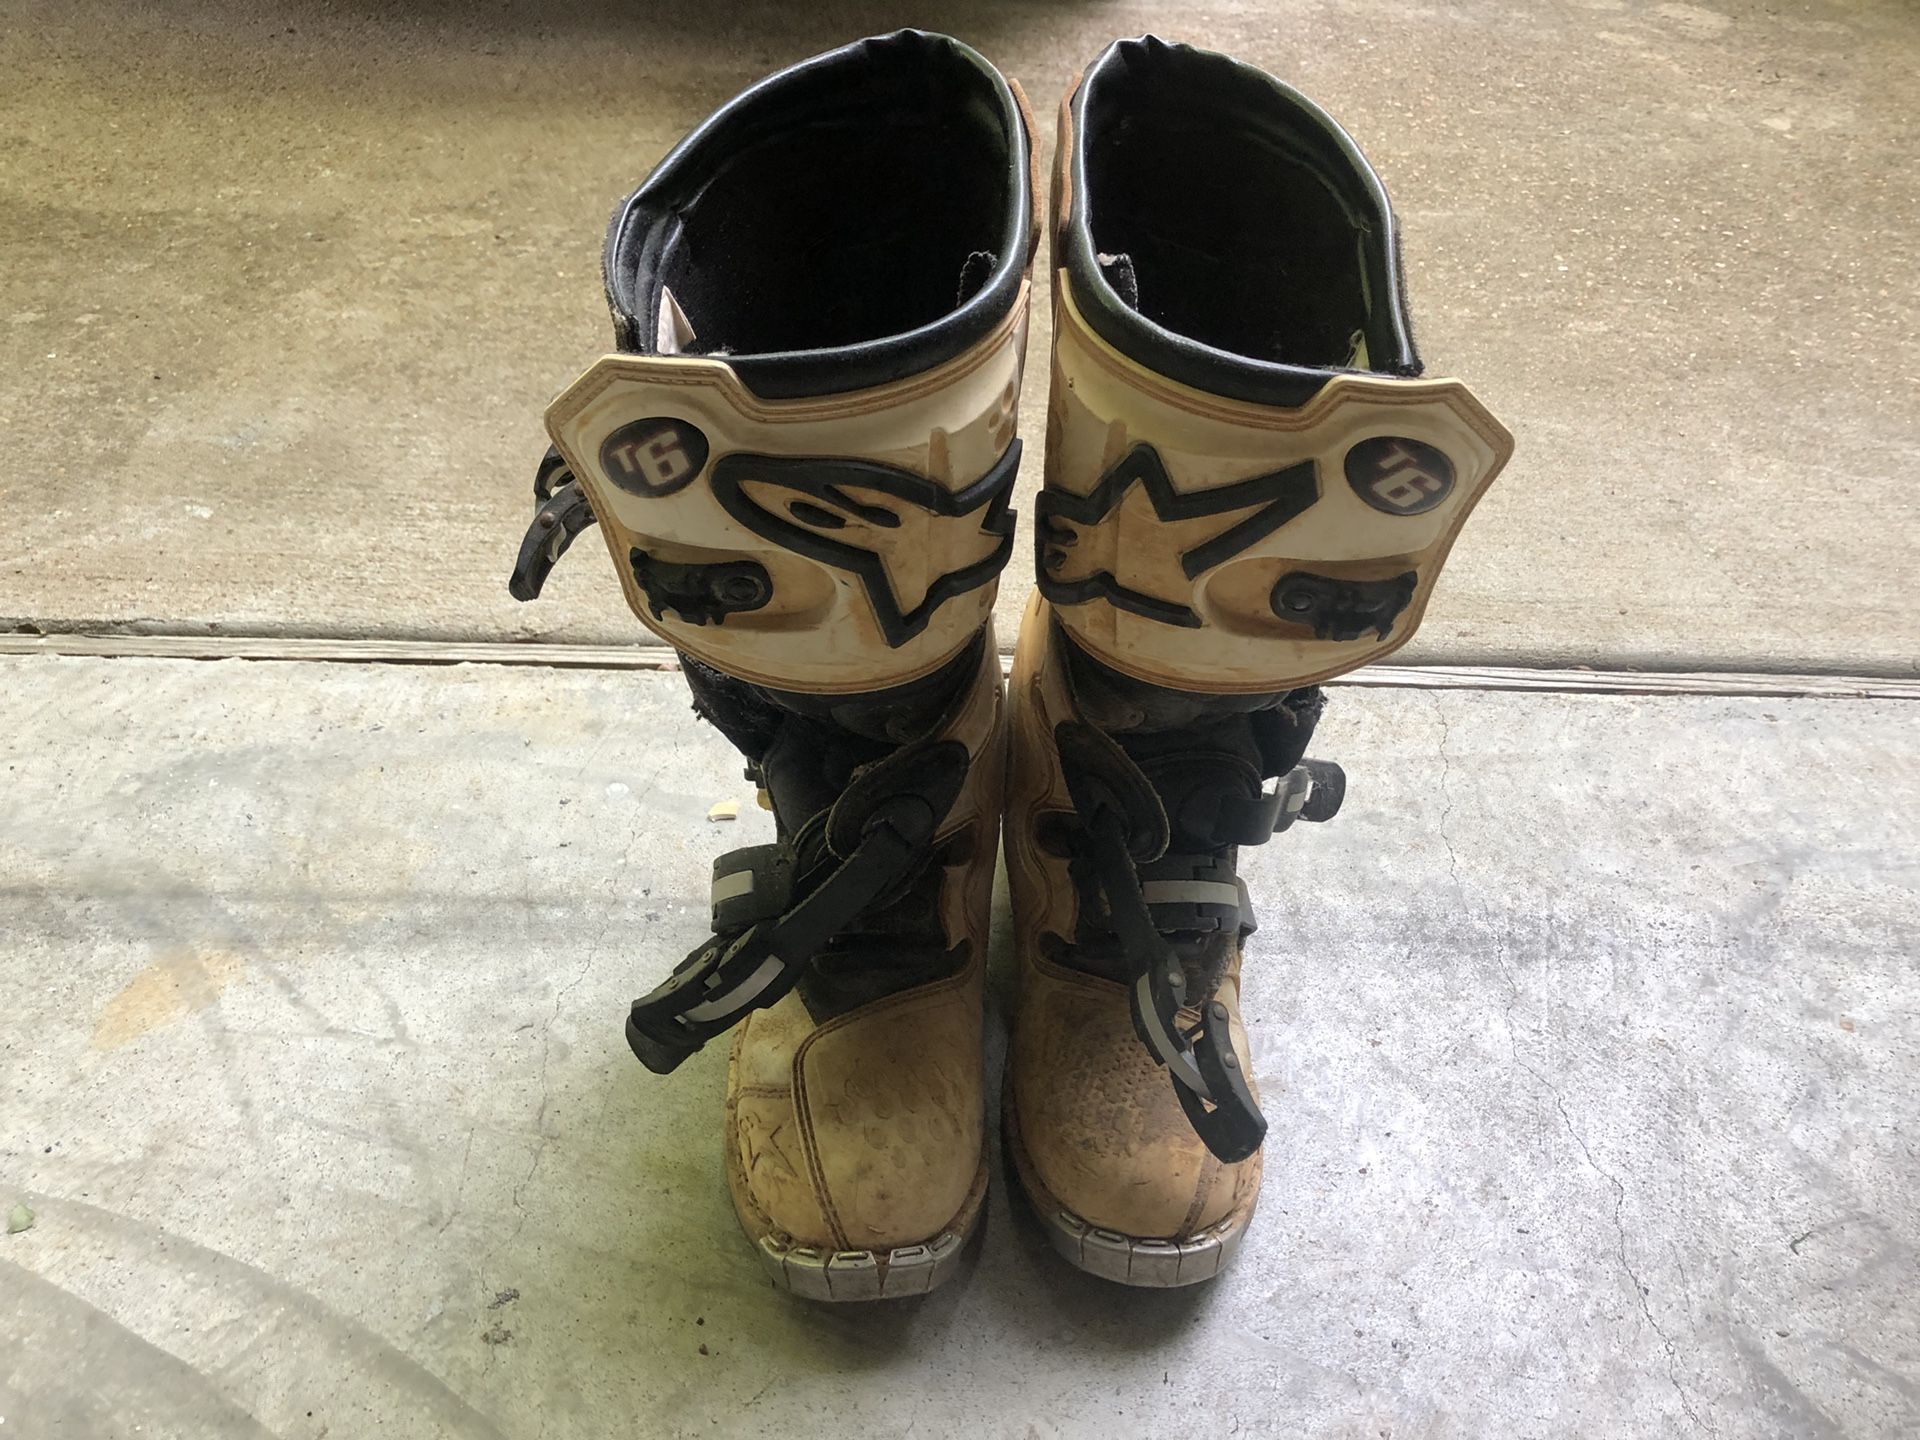 Alpine Stars Tech 6 motocross/ ATV Boots